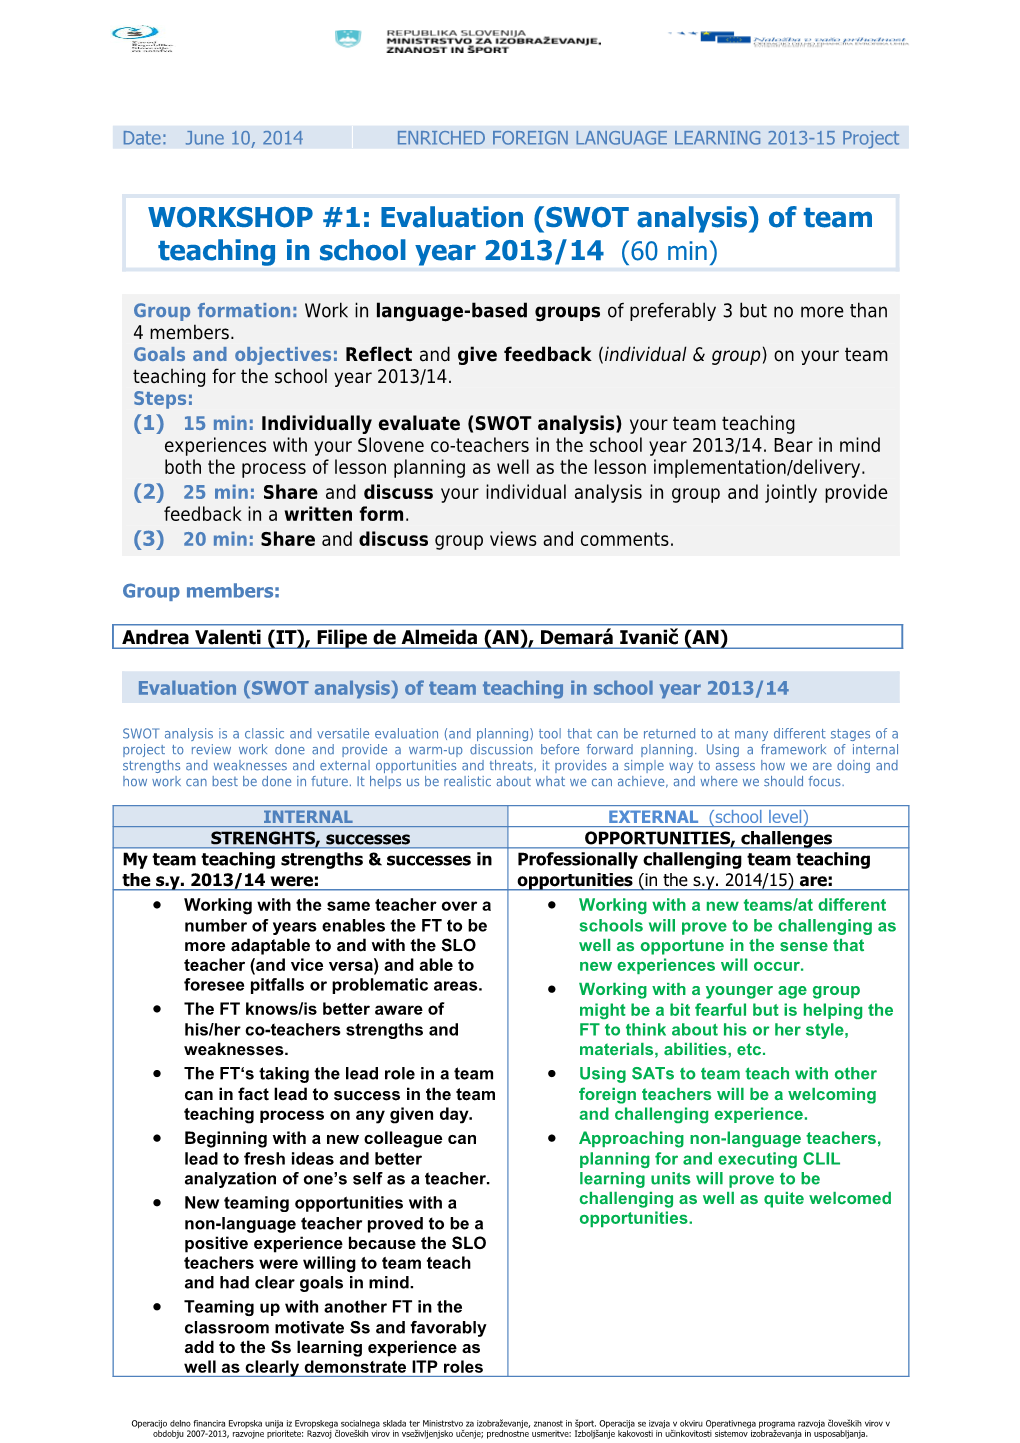 WORKSHOP #1:Evaluation (SWOT Analysis) of Team Teaching in School Year 2013/14 (60 Min)